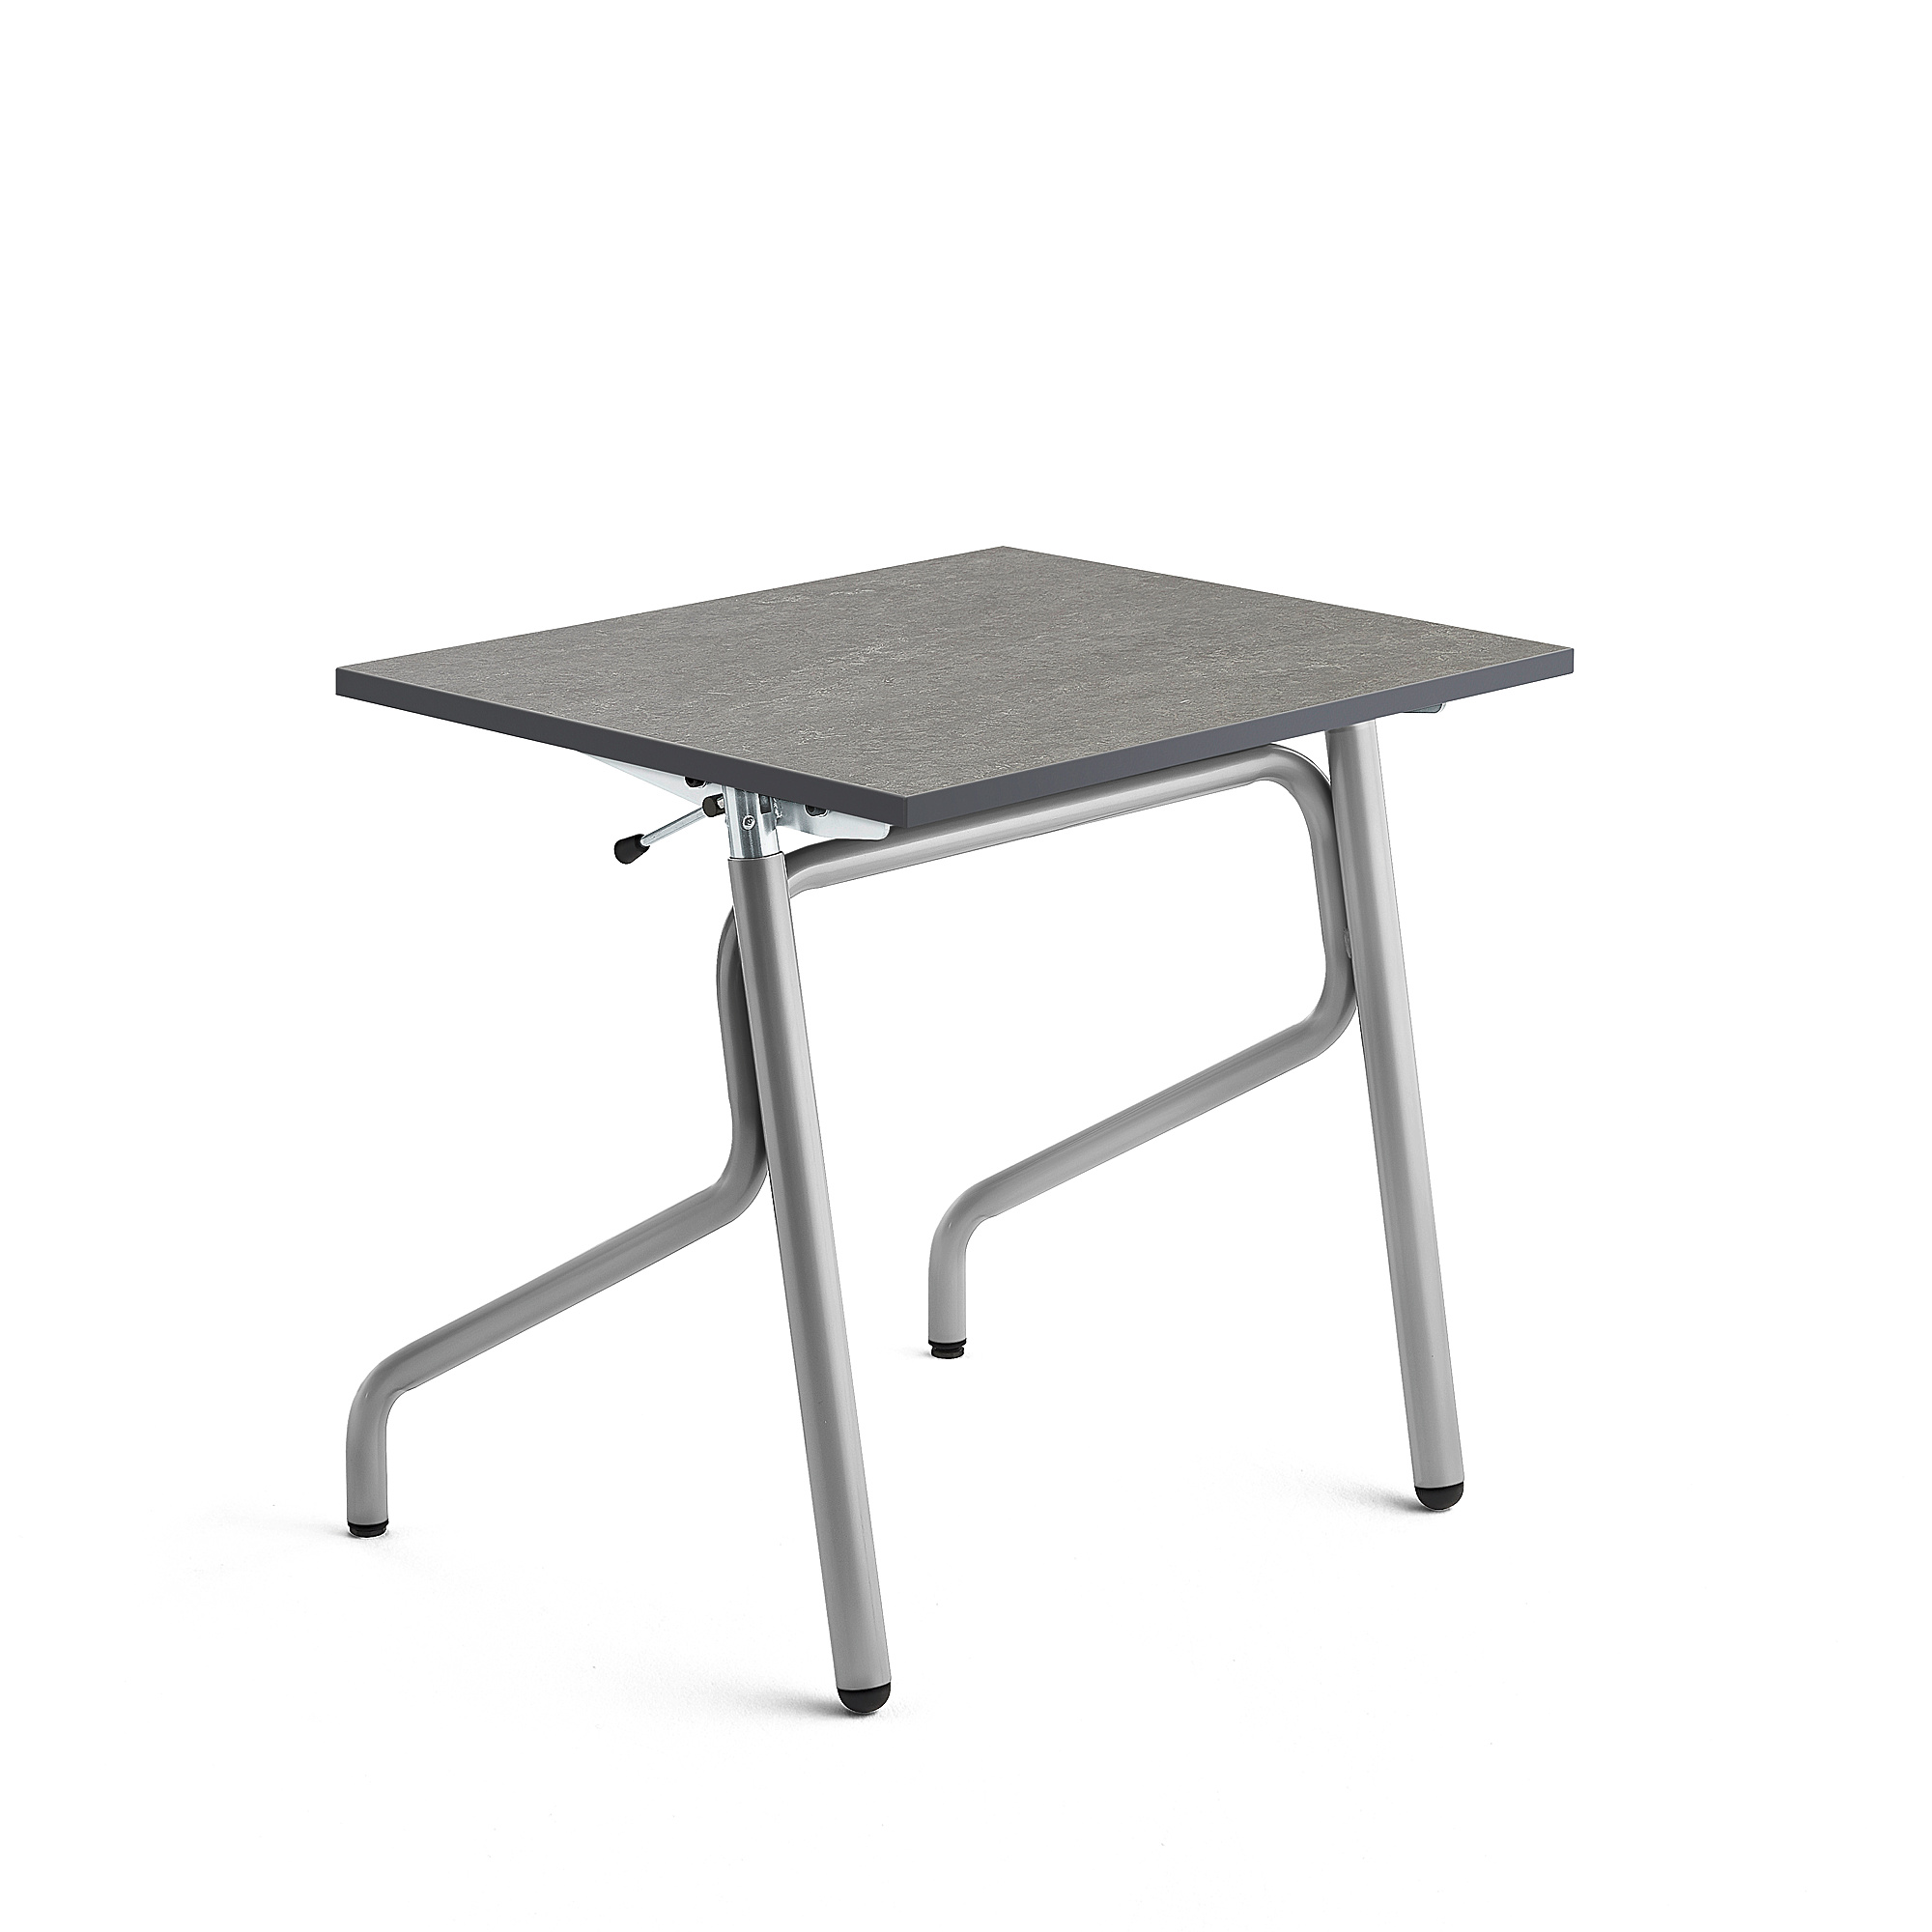 E-shop Nastaviteľná školská lavica ADJUST, 700x600 mm, linoleum - tmavošedá, strieborná